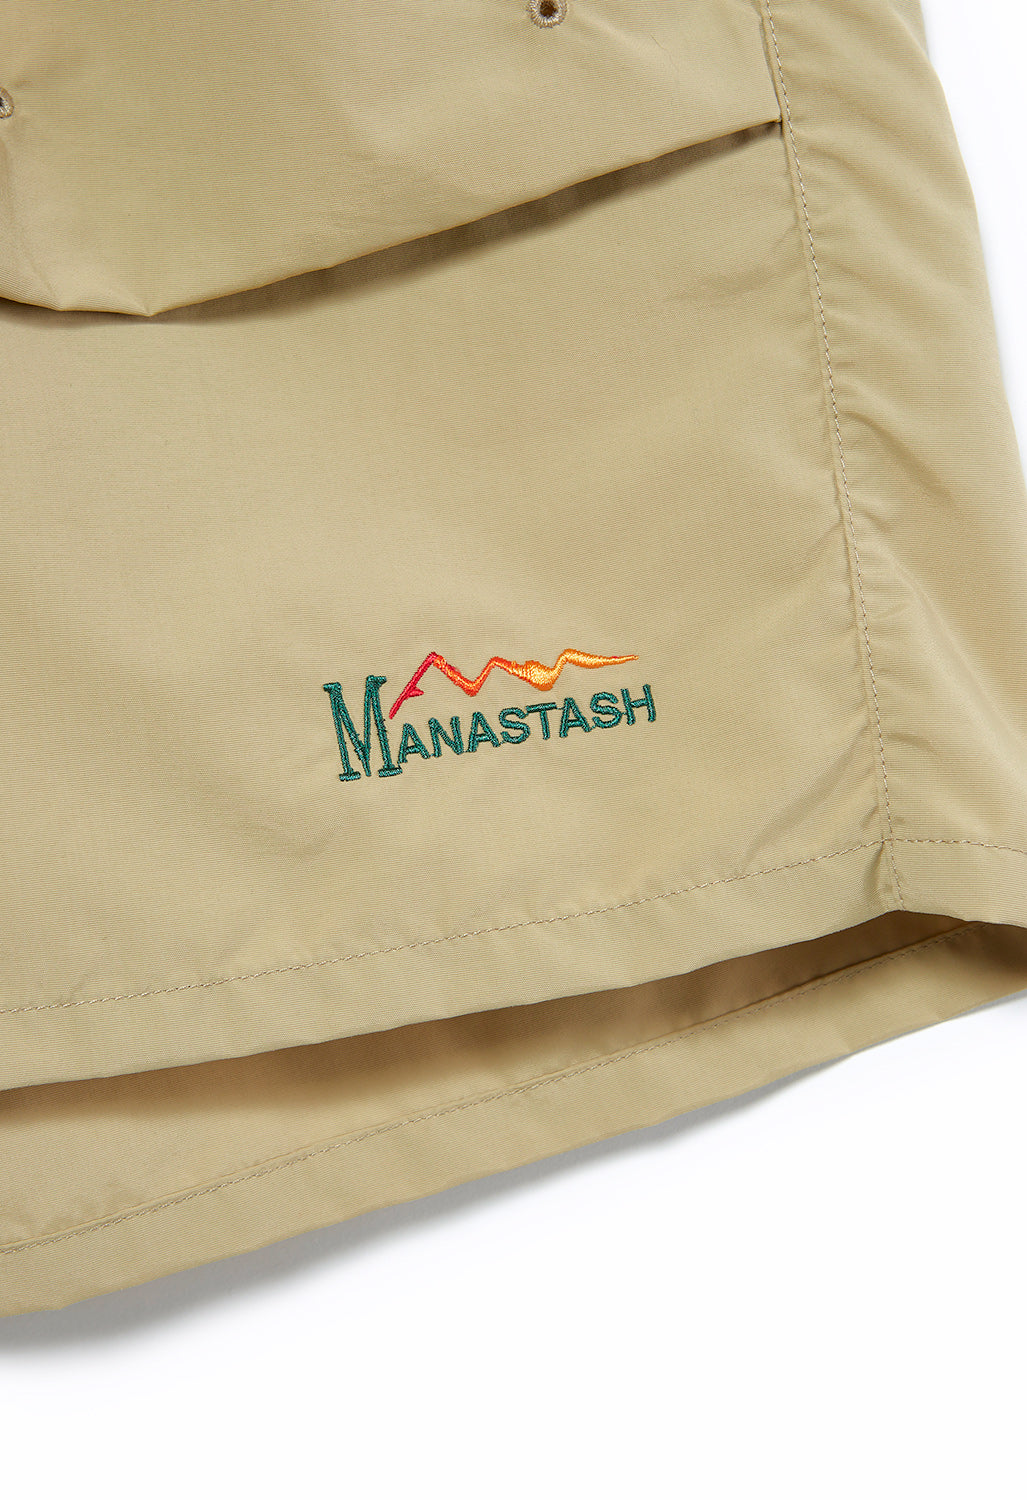 Manastash River Men's Shorts - Khaki